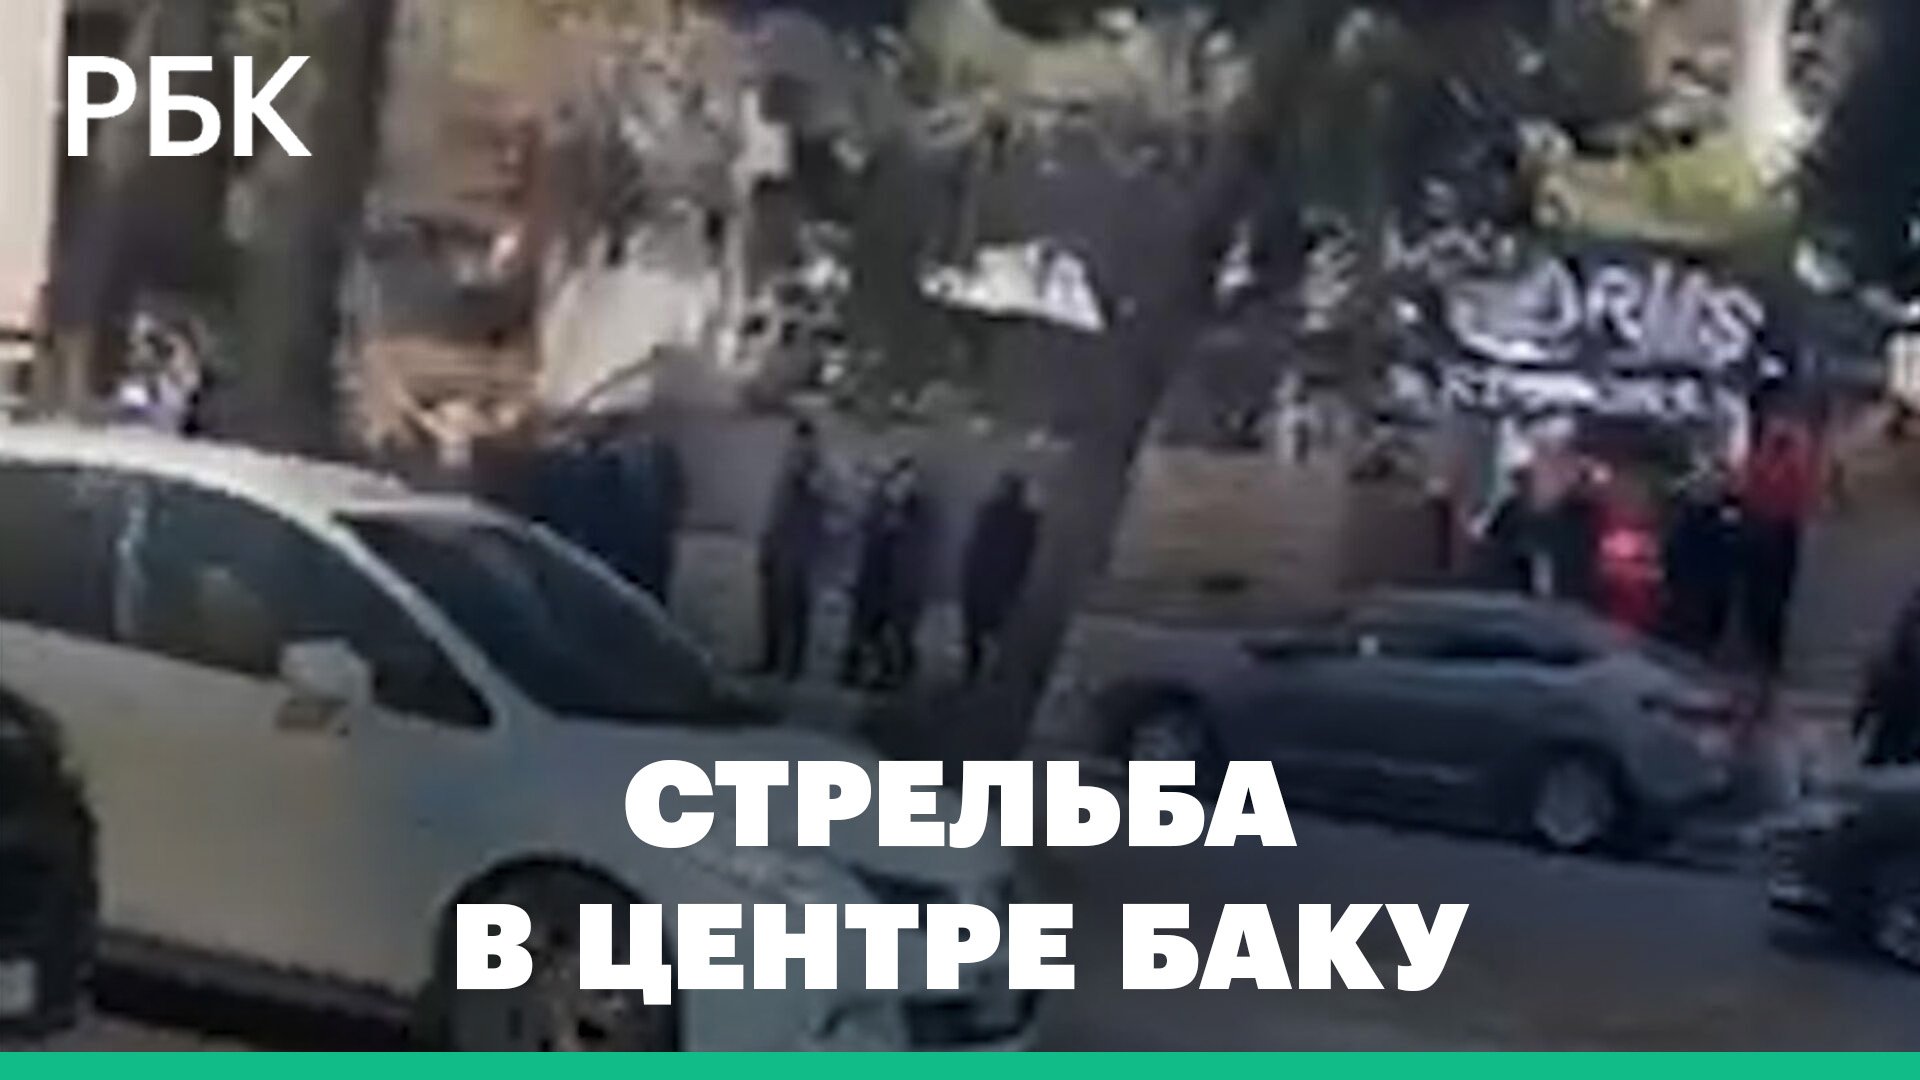 Перестрелка в центре Баку, три человека пострадали